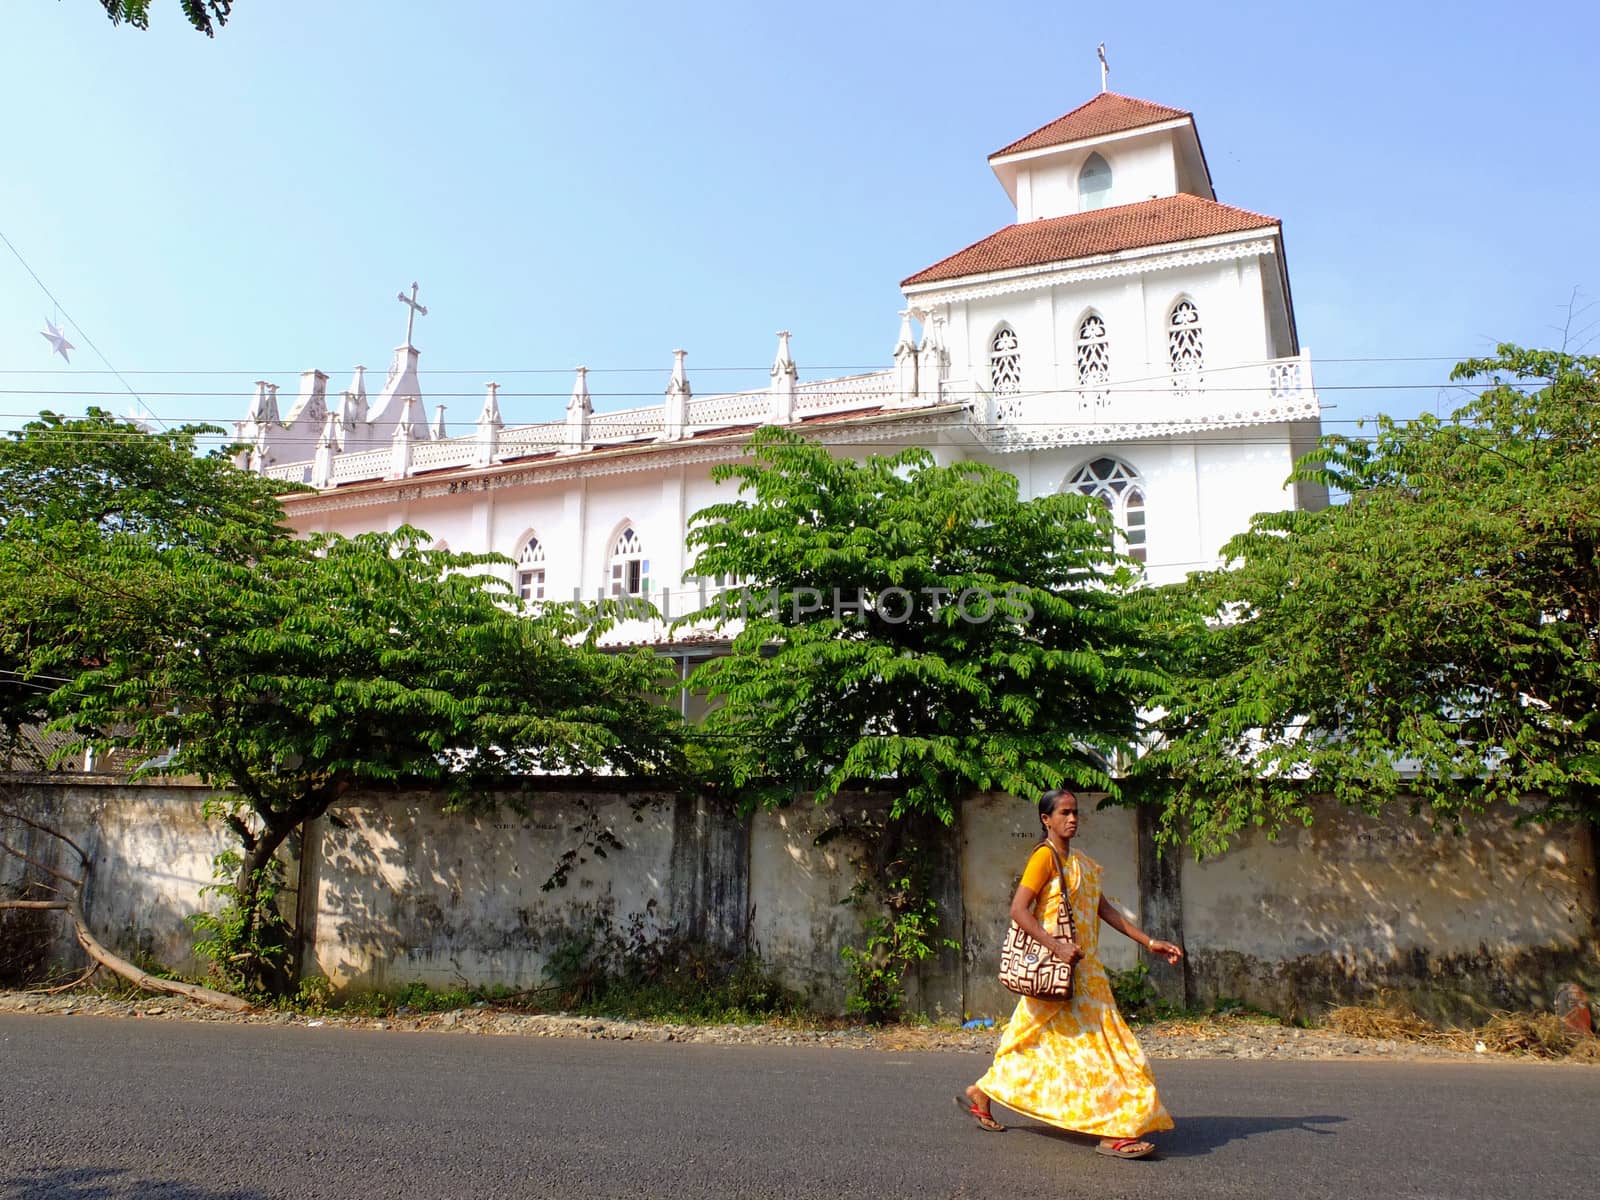 St Thomas orthodox church in Alappuzha, Kerala, India.